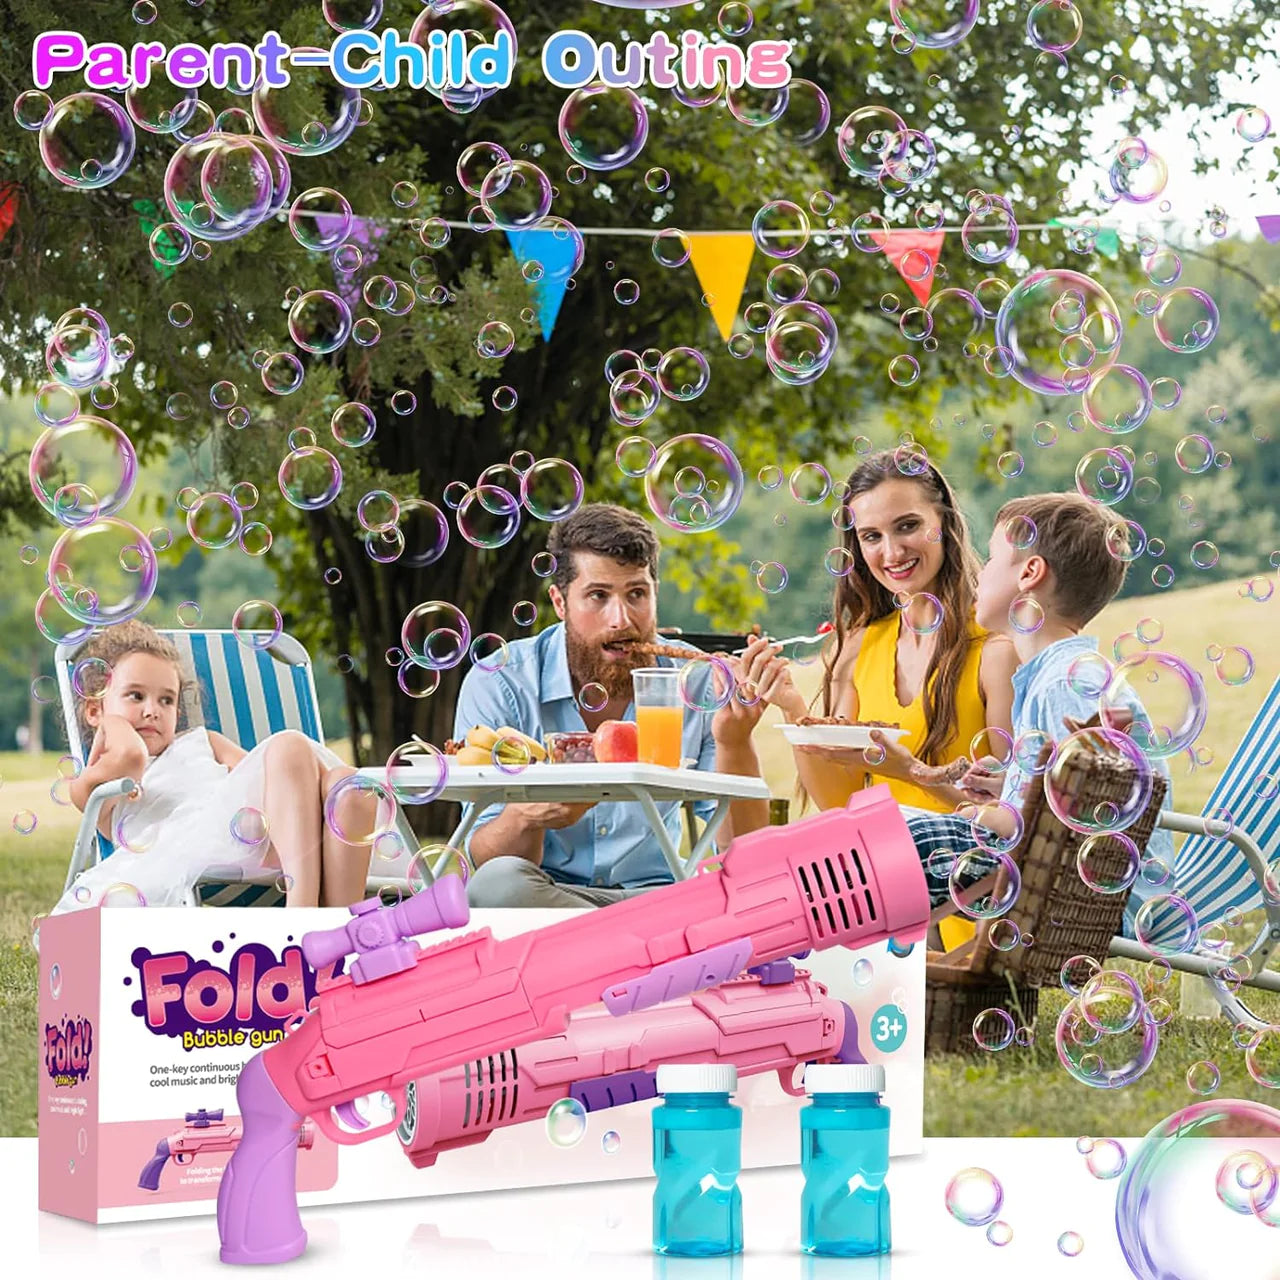 10 Holes Automatic Crazy Bubble Gun Toy for kids